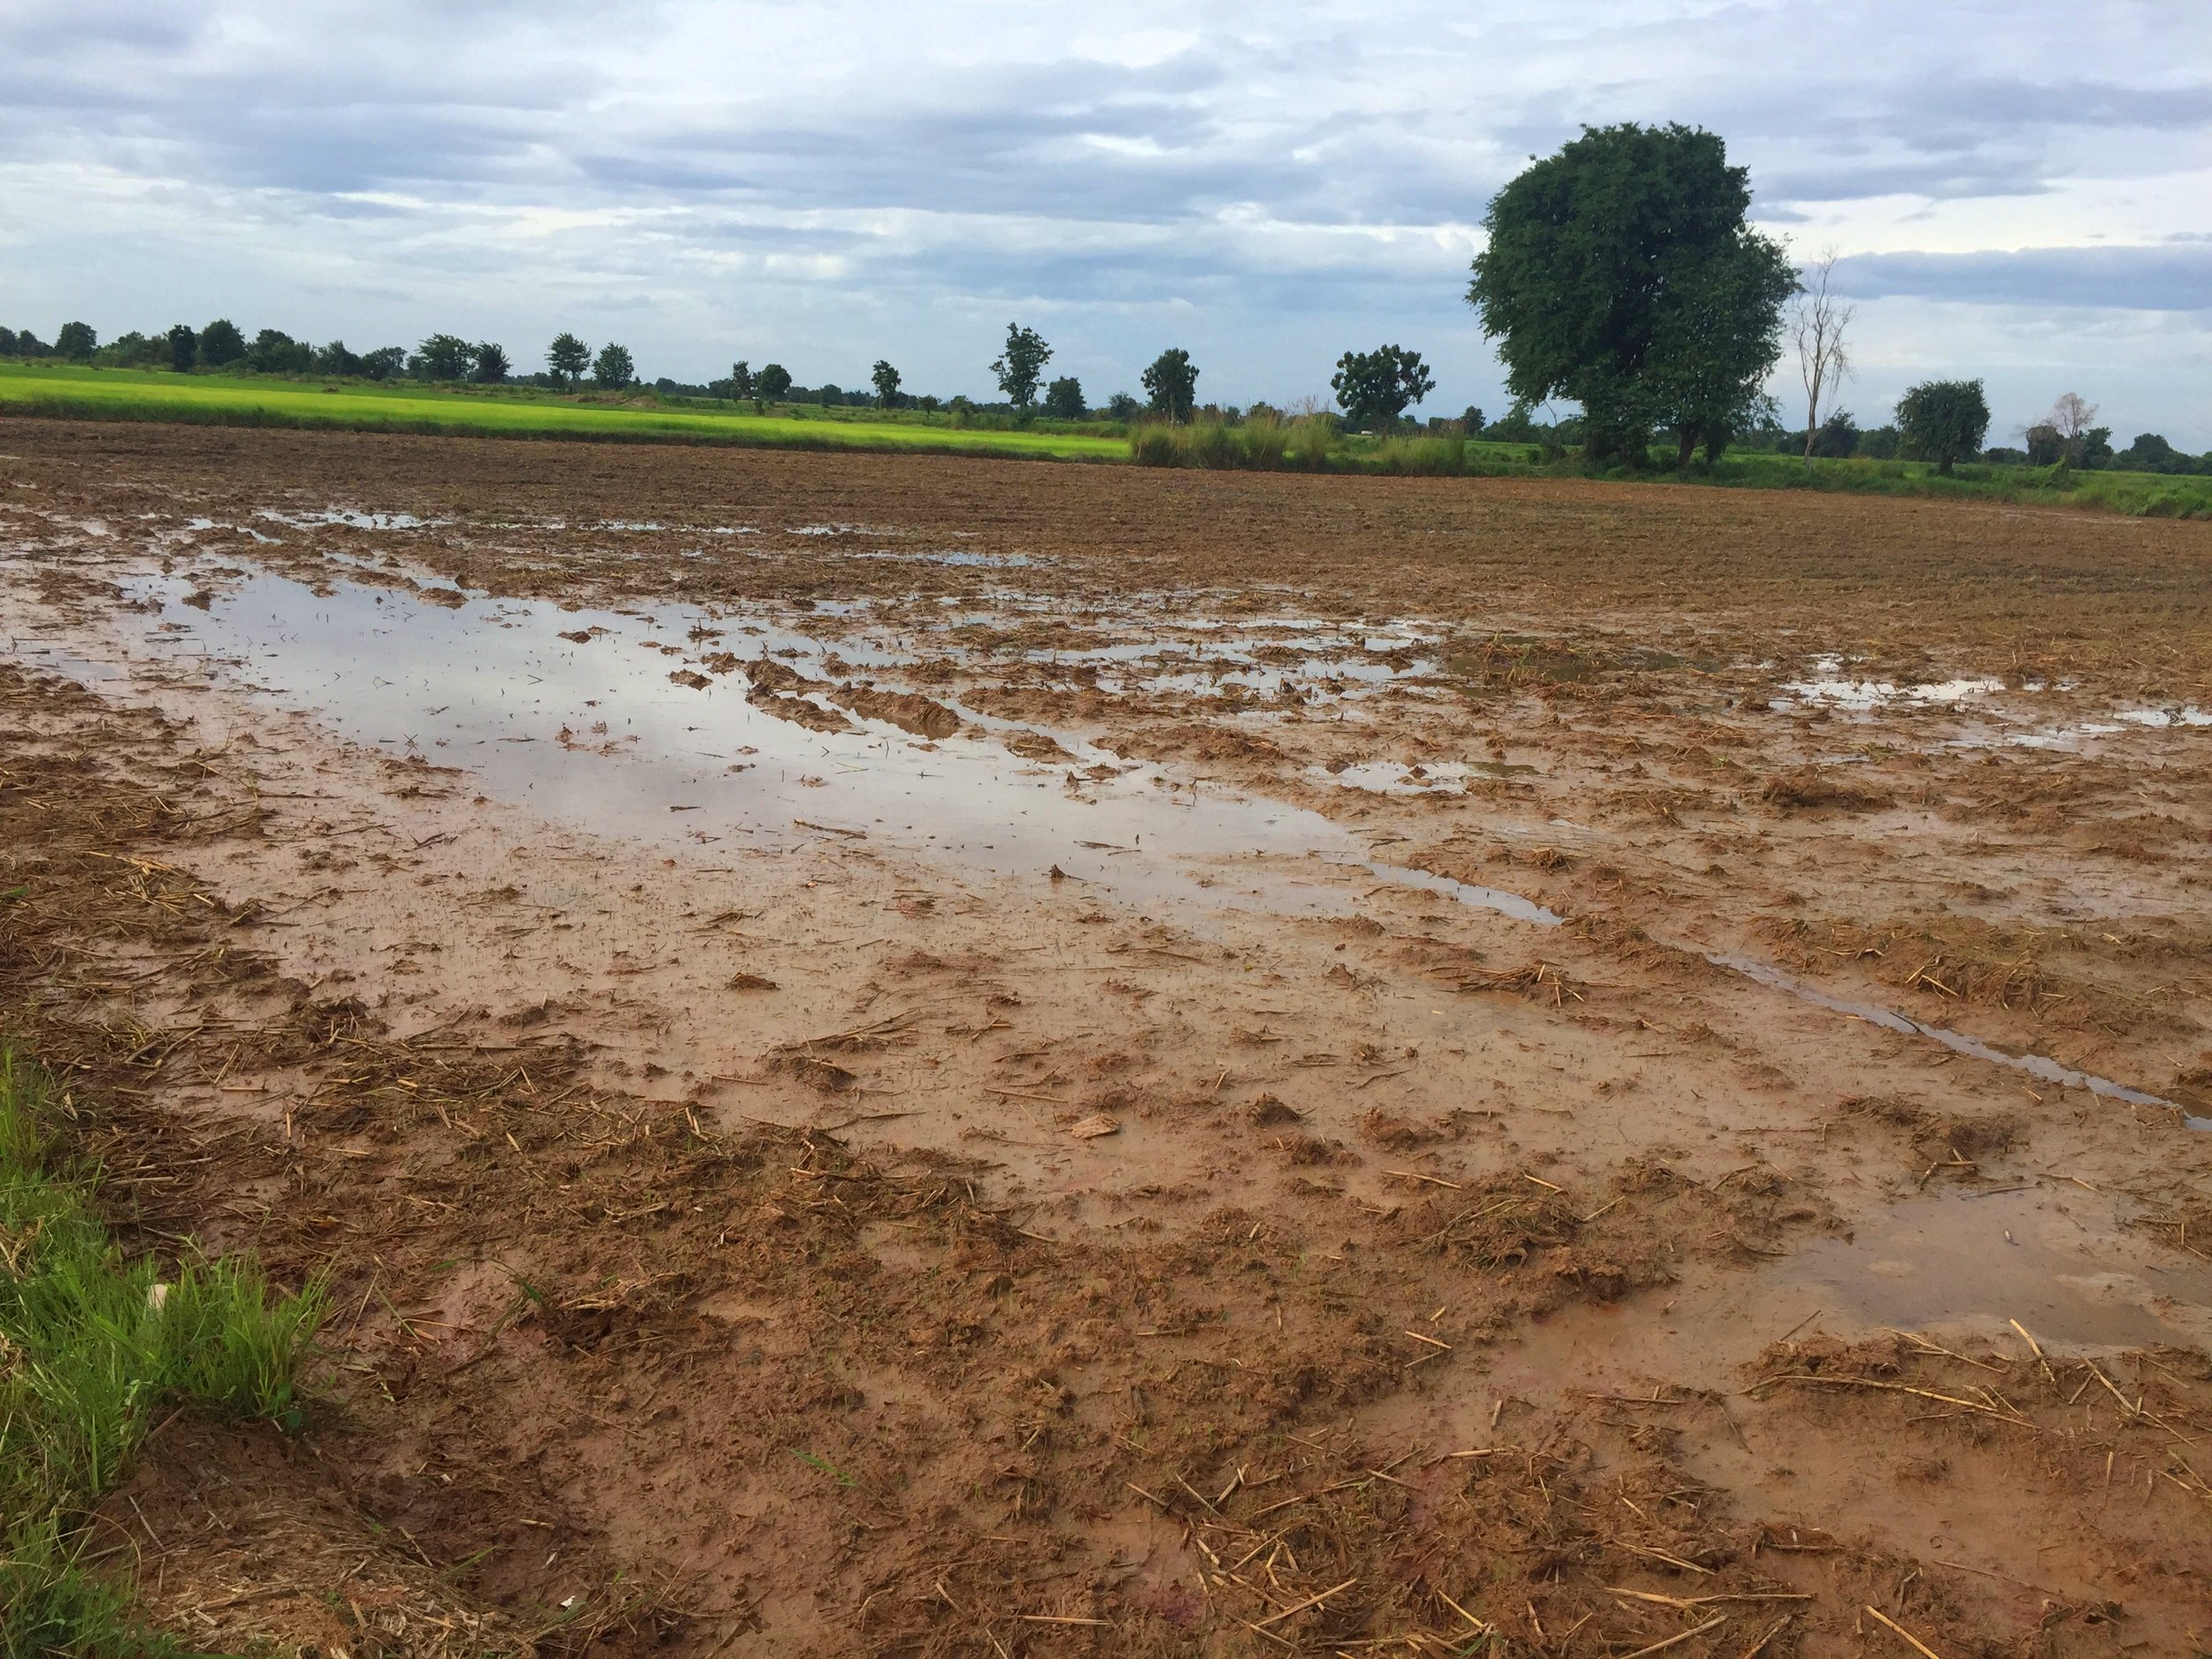 Muddy Rice Field, Rainy Season